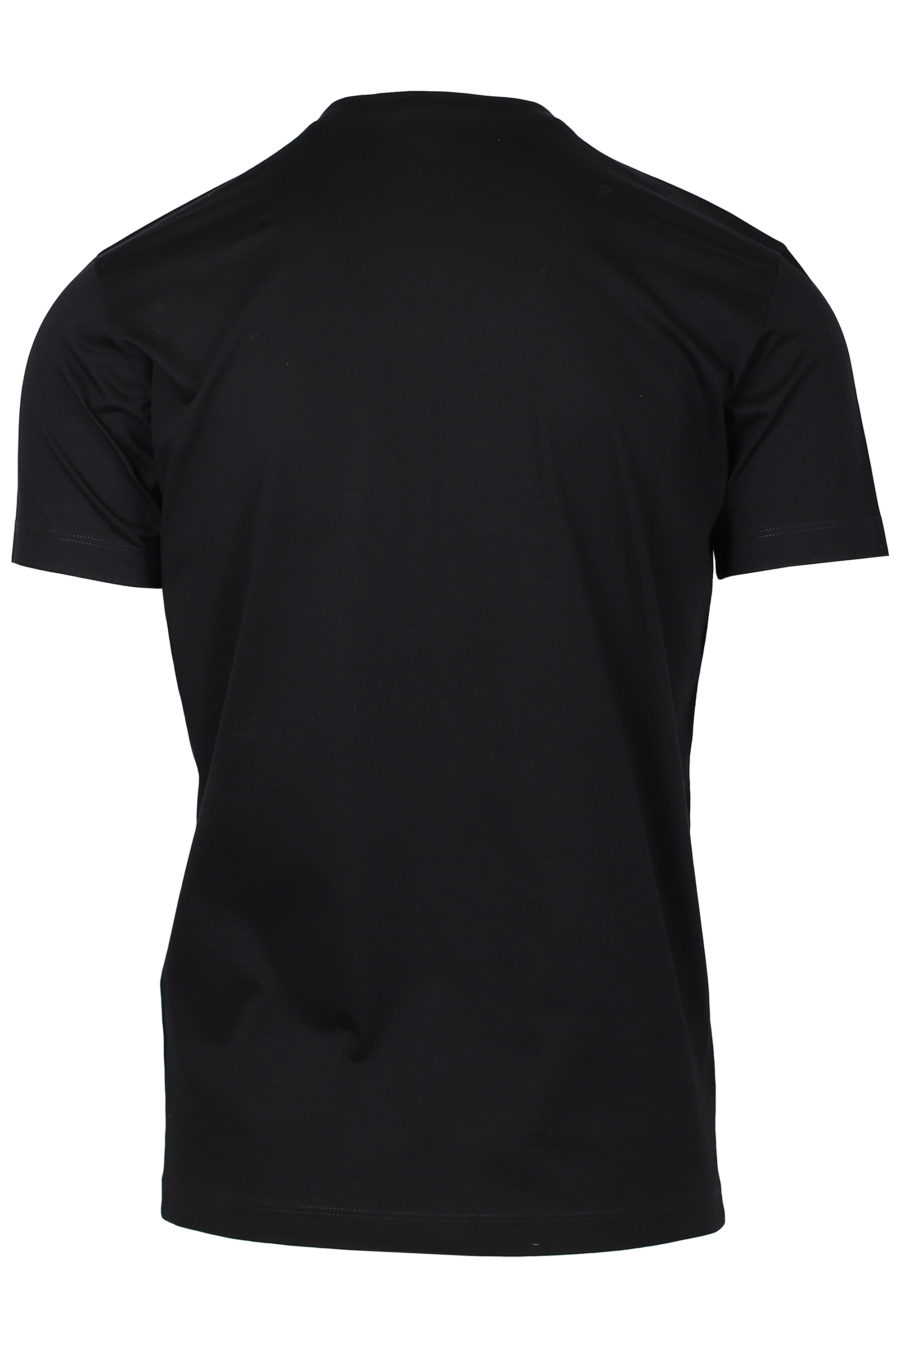 T-shirt noir avec logo de la marque en spray - IMG 2233